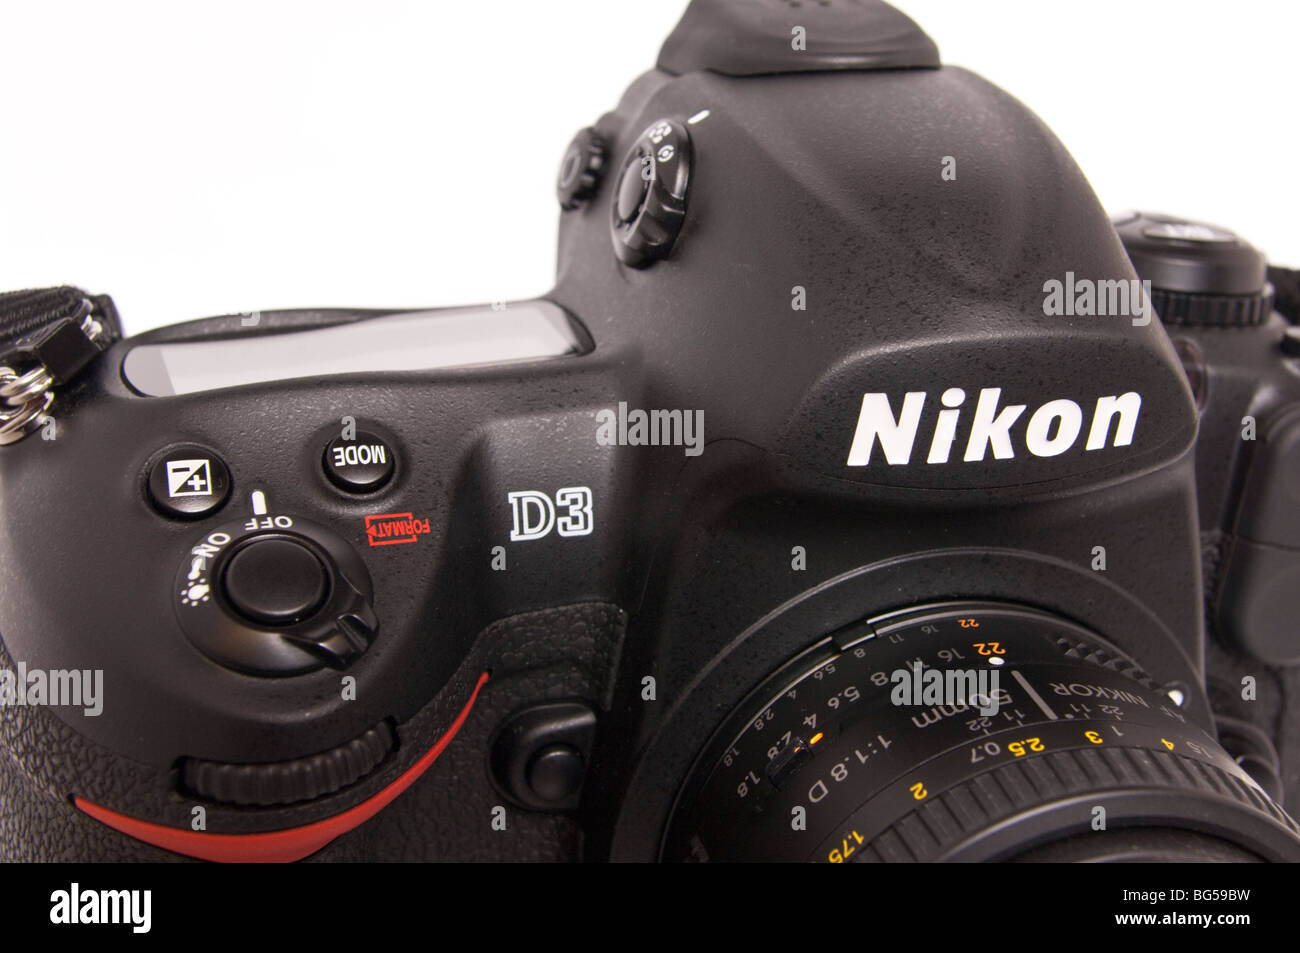 Nikon fx camera fotografías e imágenes de alta resolución - Alamy